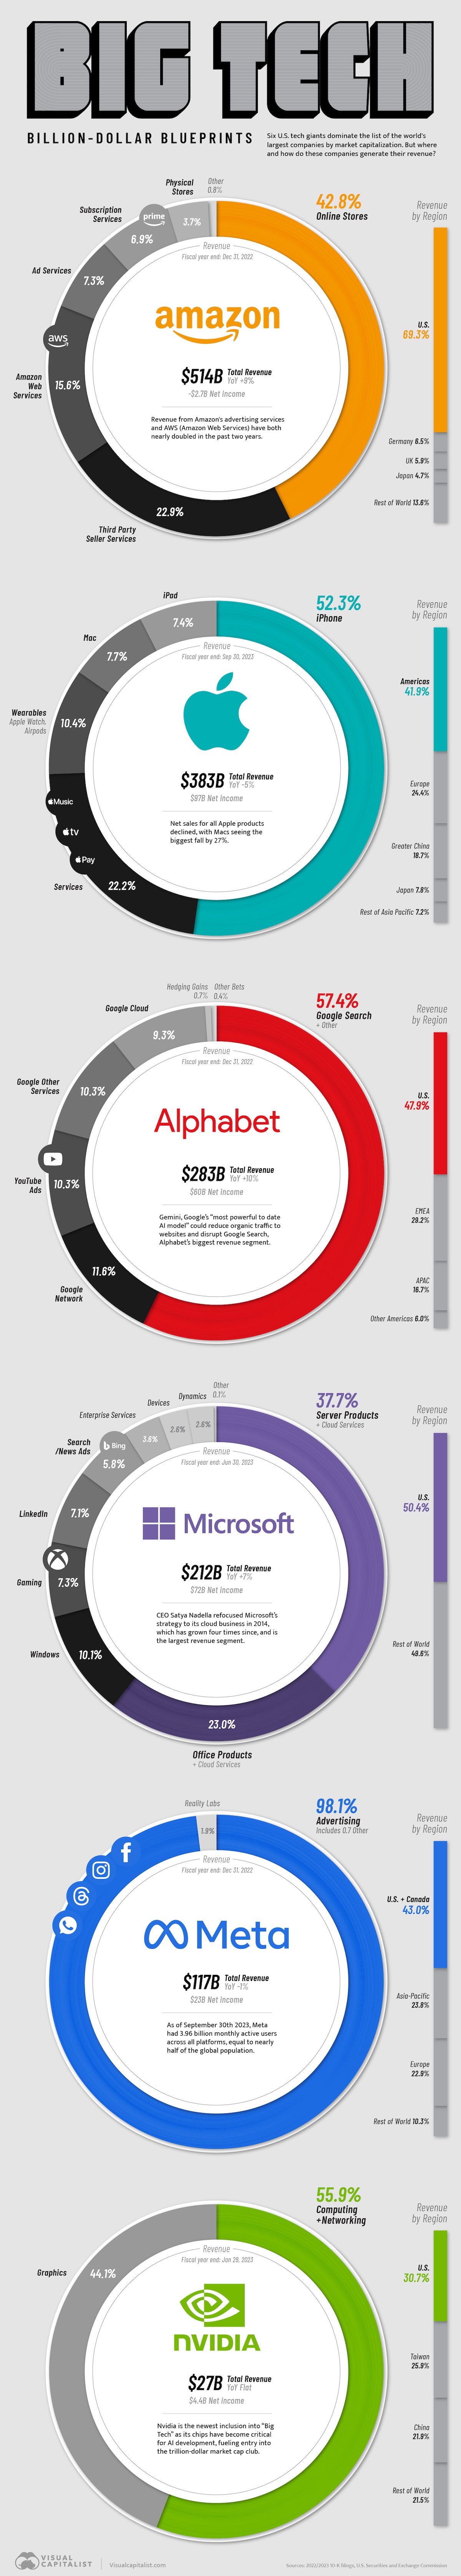 How Big Tech Companies Make Their Billions - Infographic